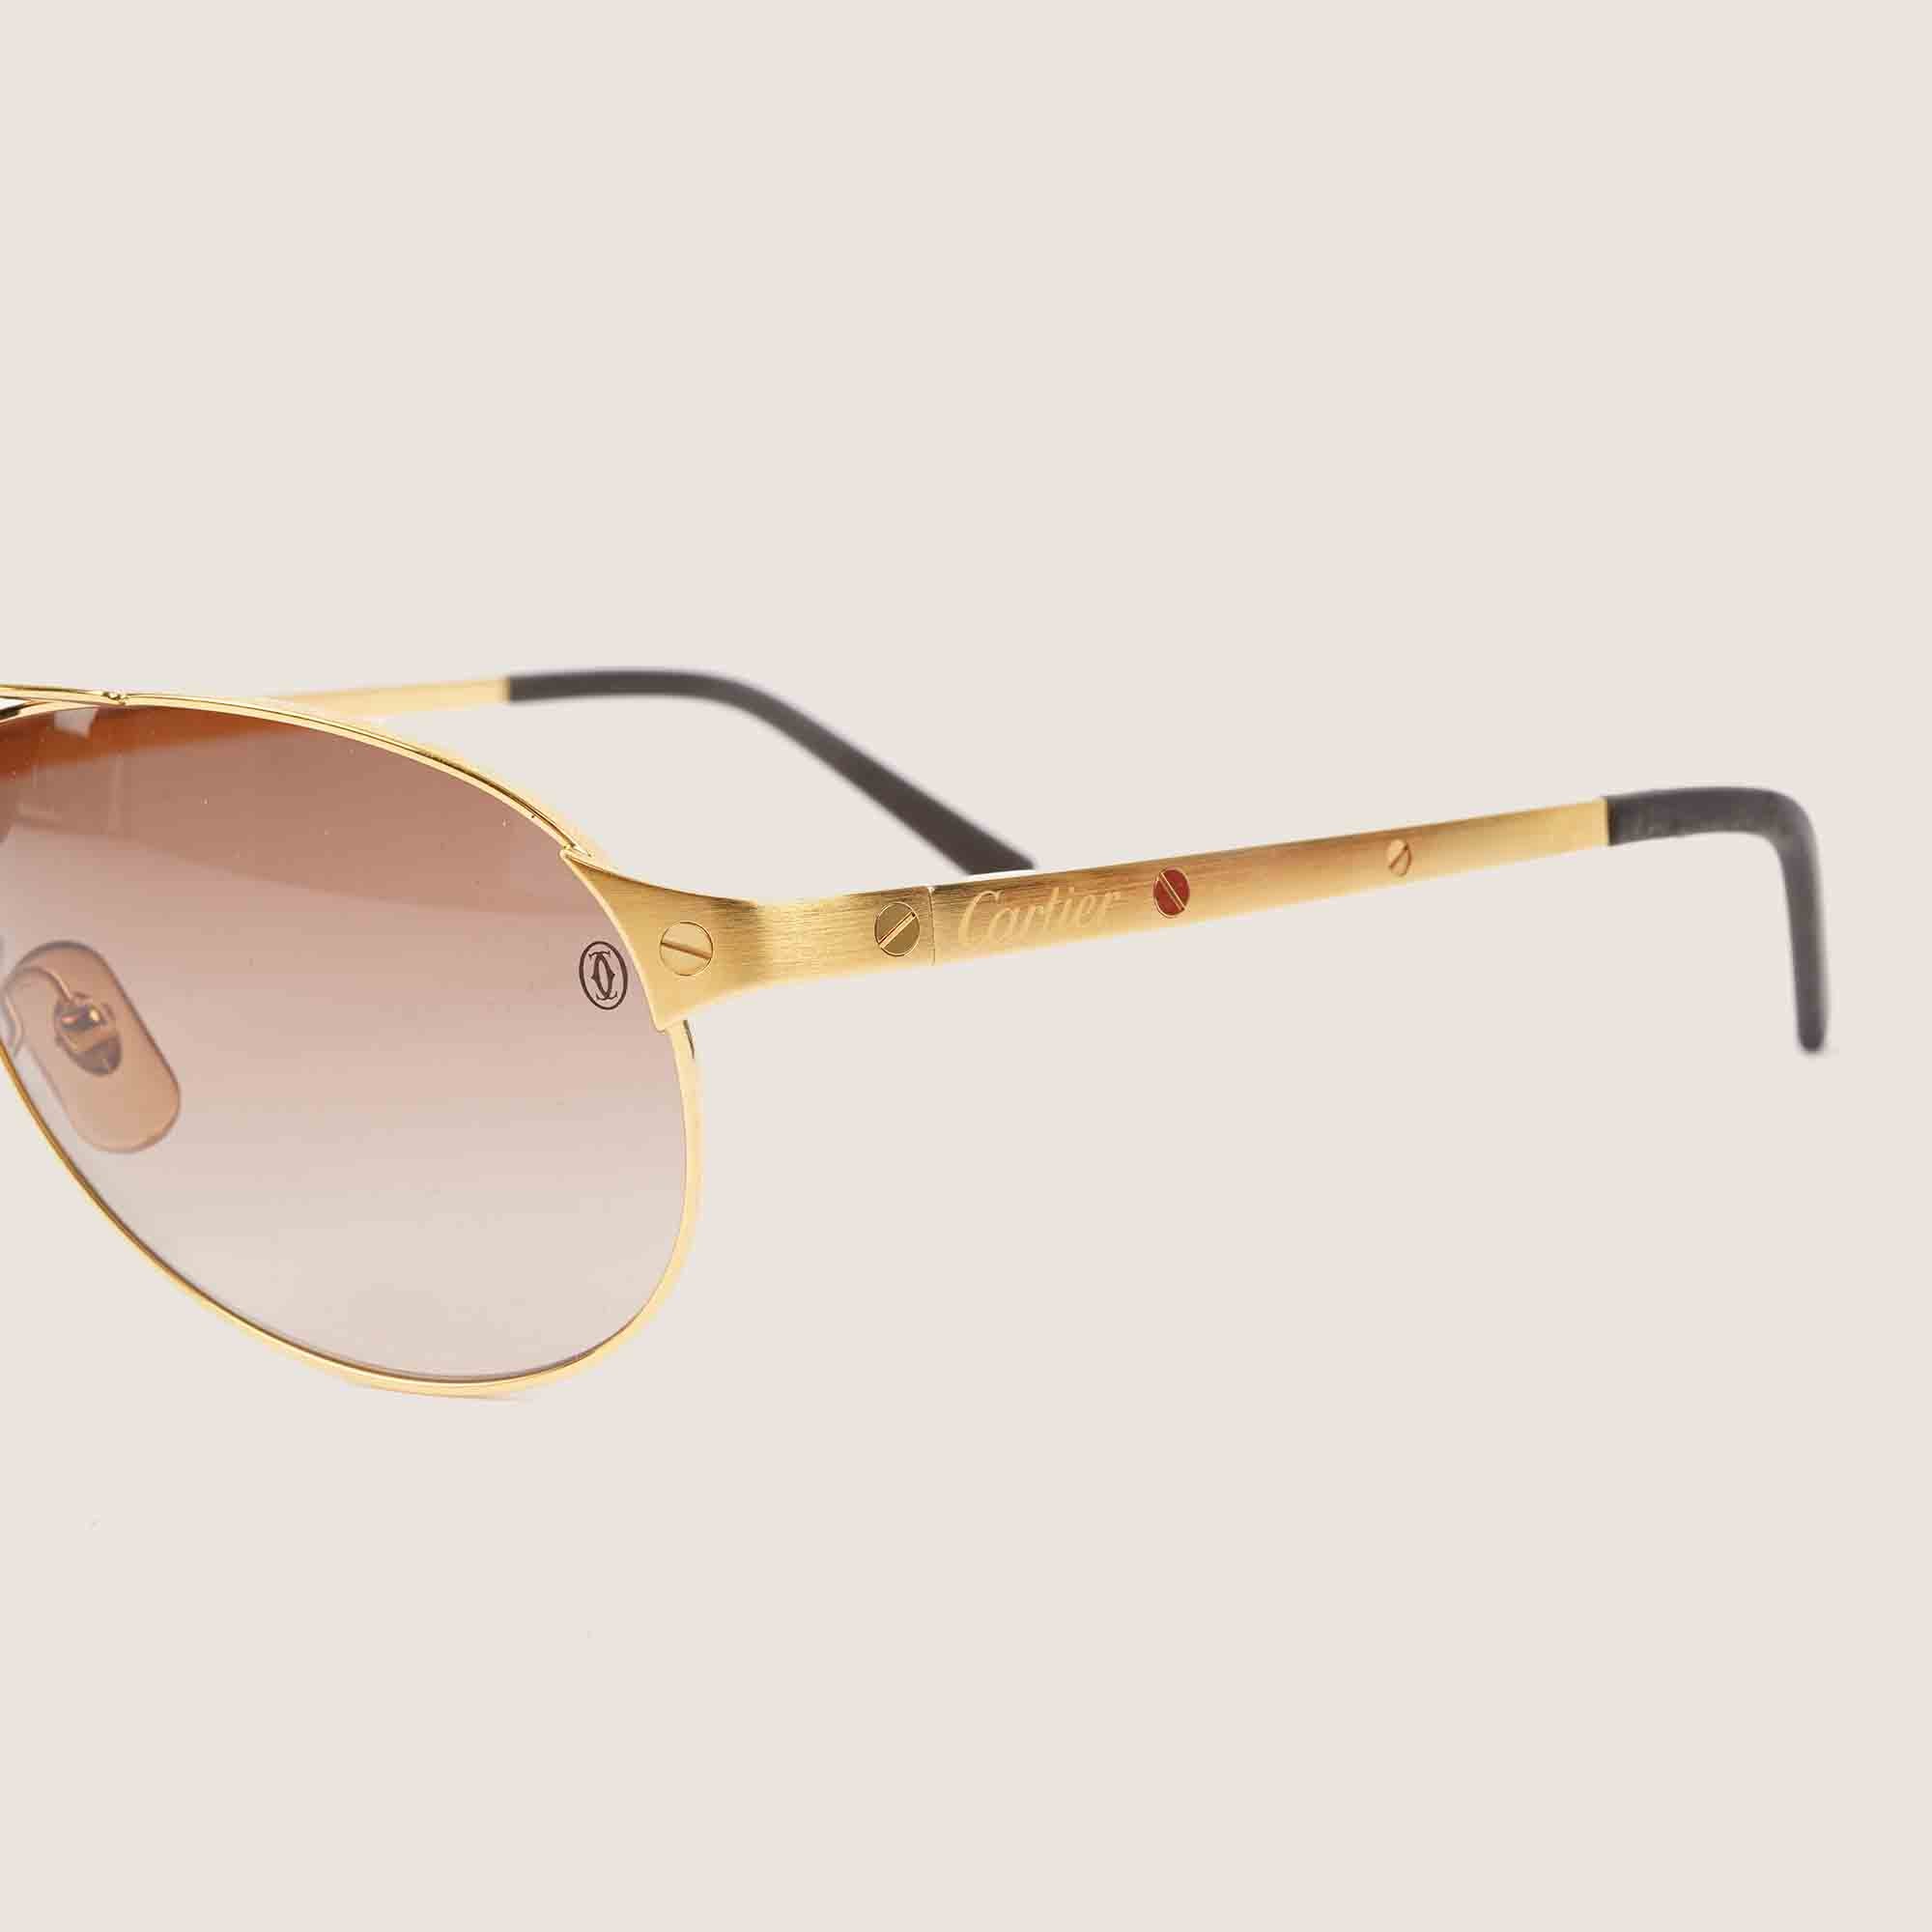 Aviator Sunglasses - CARTIER - Affordable Luxury image